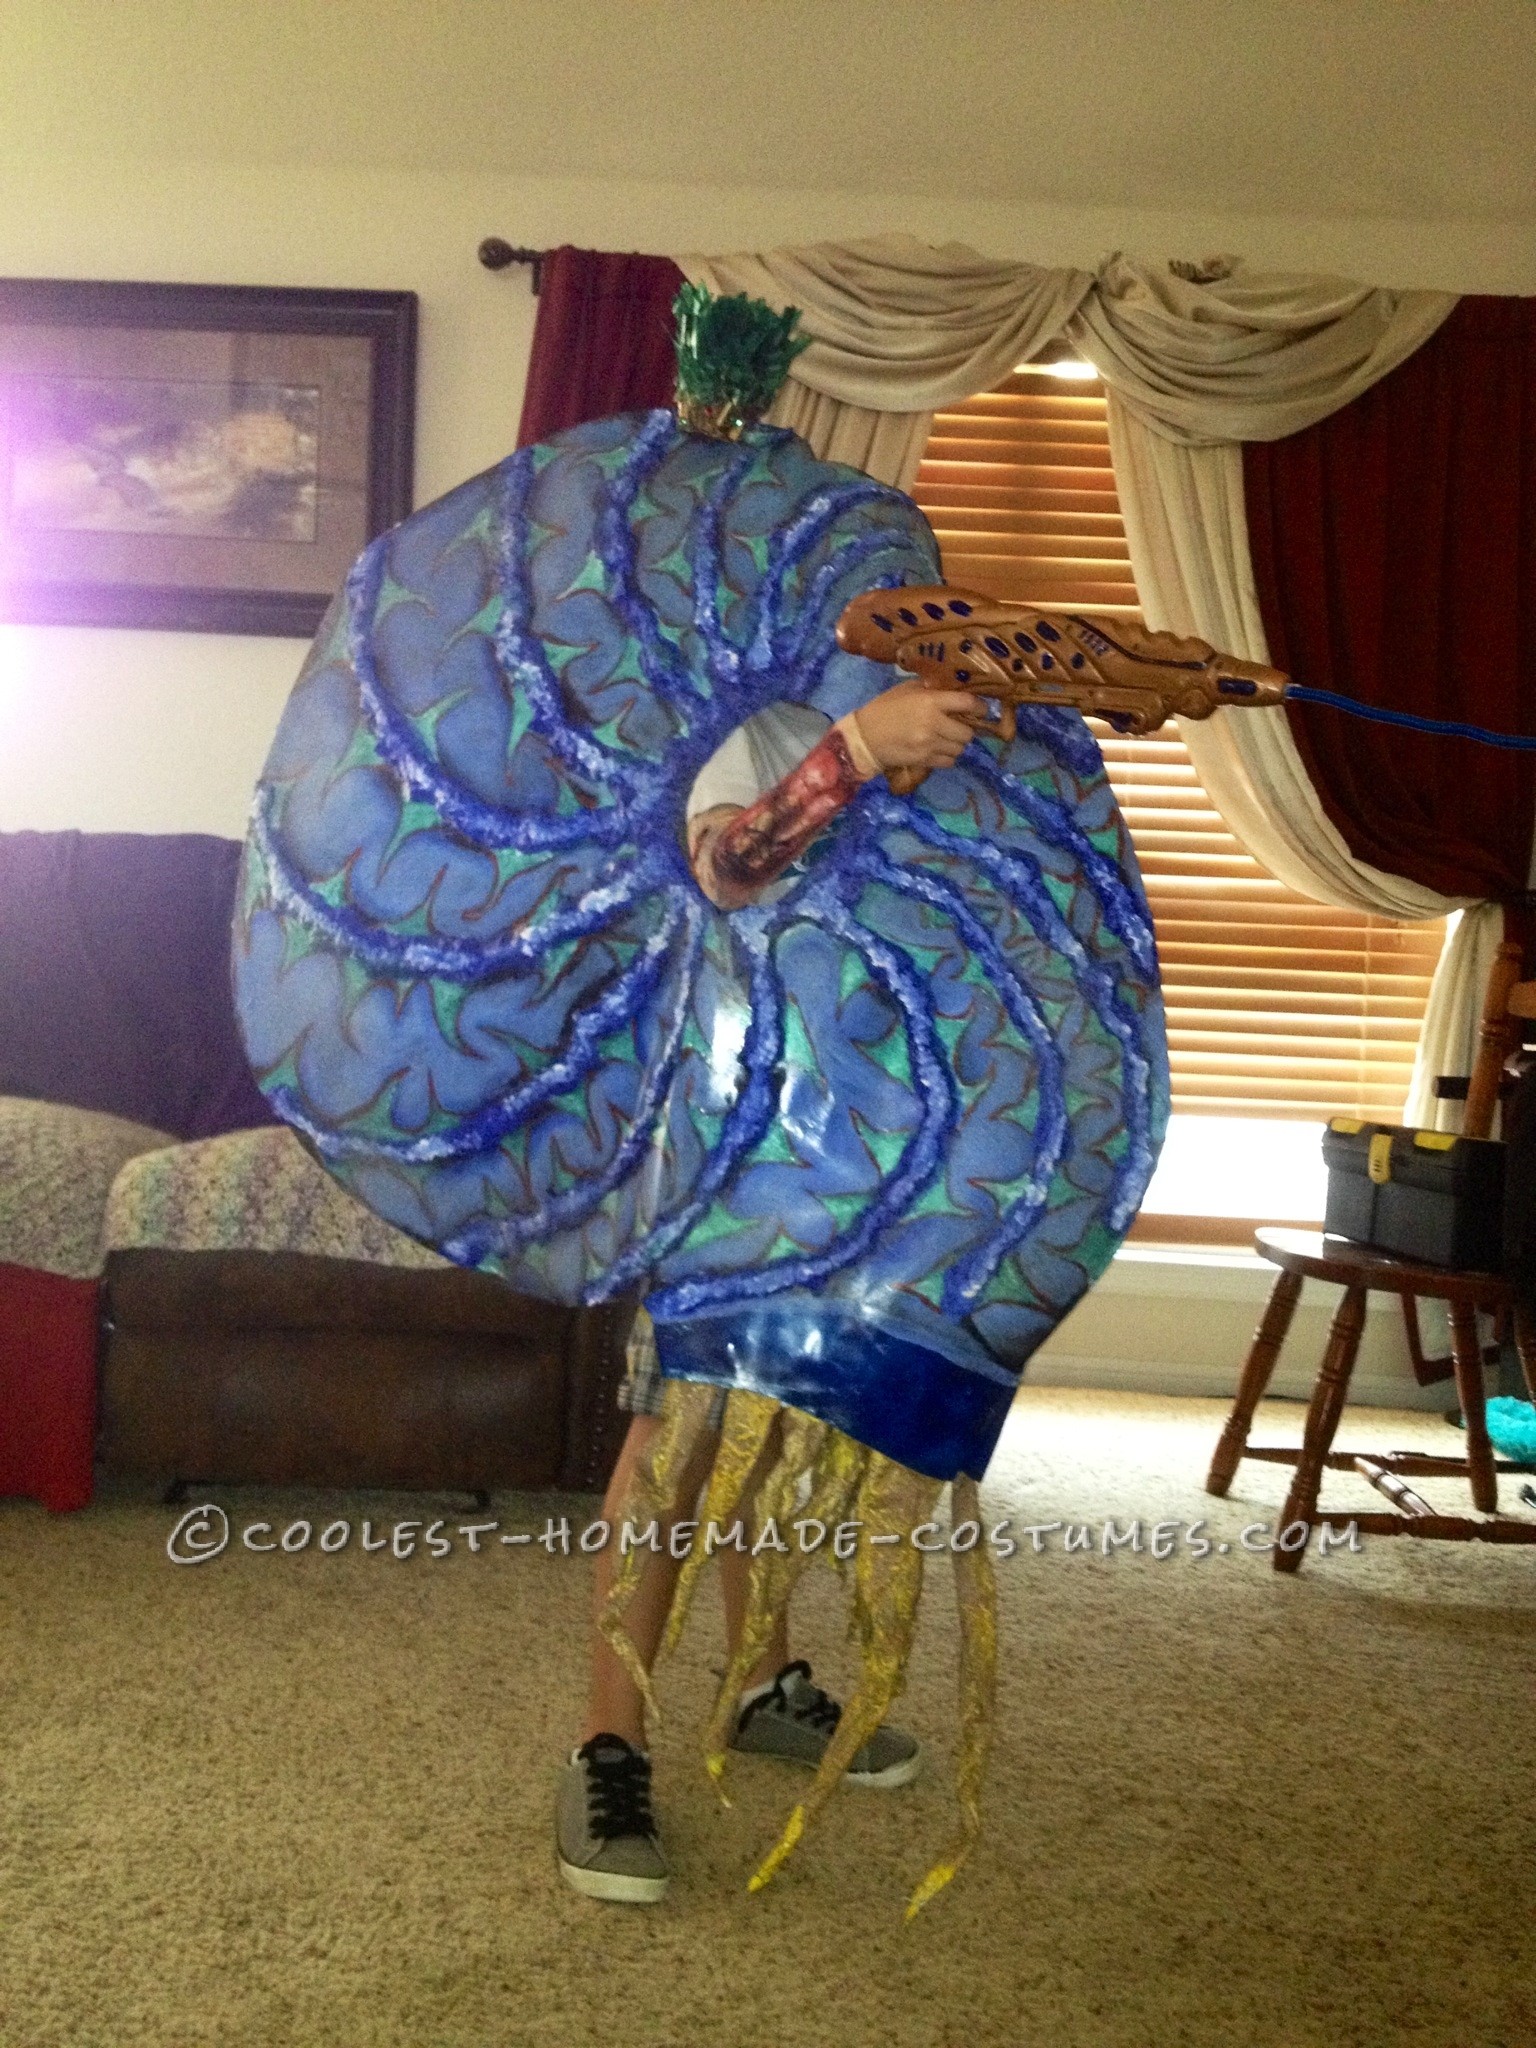 Original Homemade Costume Idea: Ammonite King